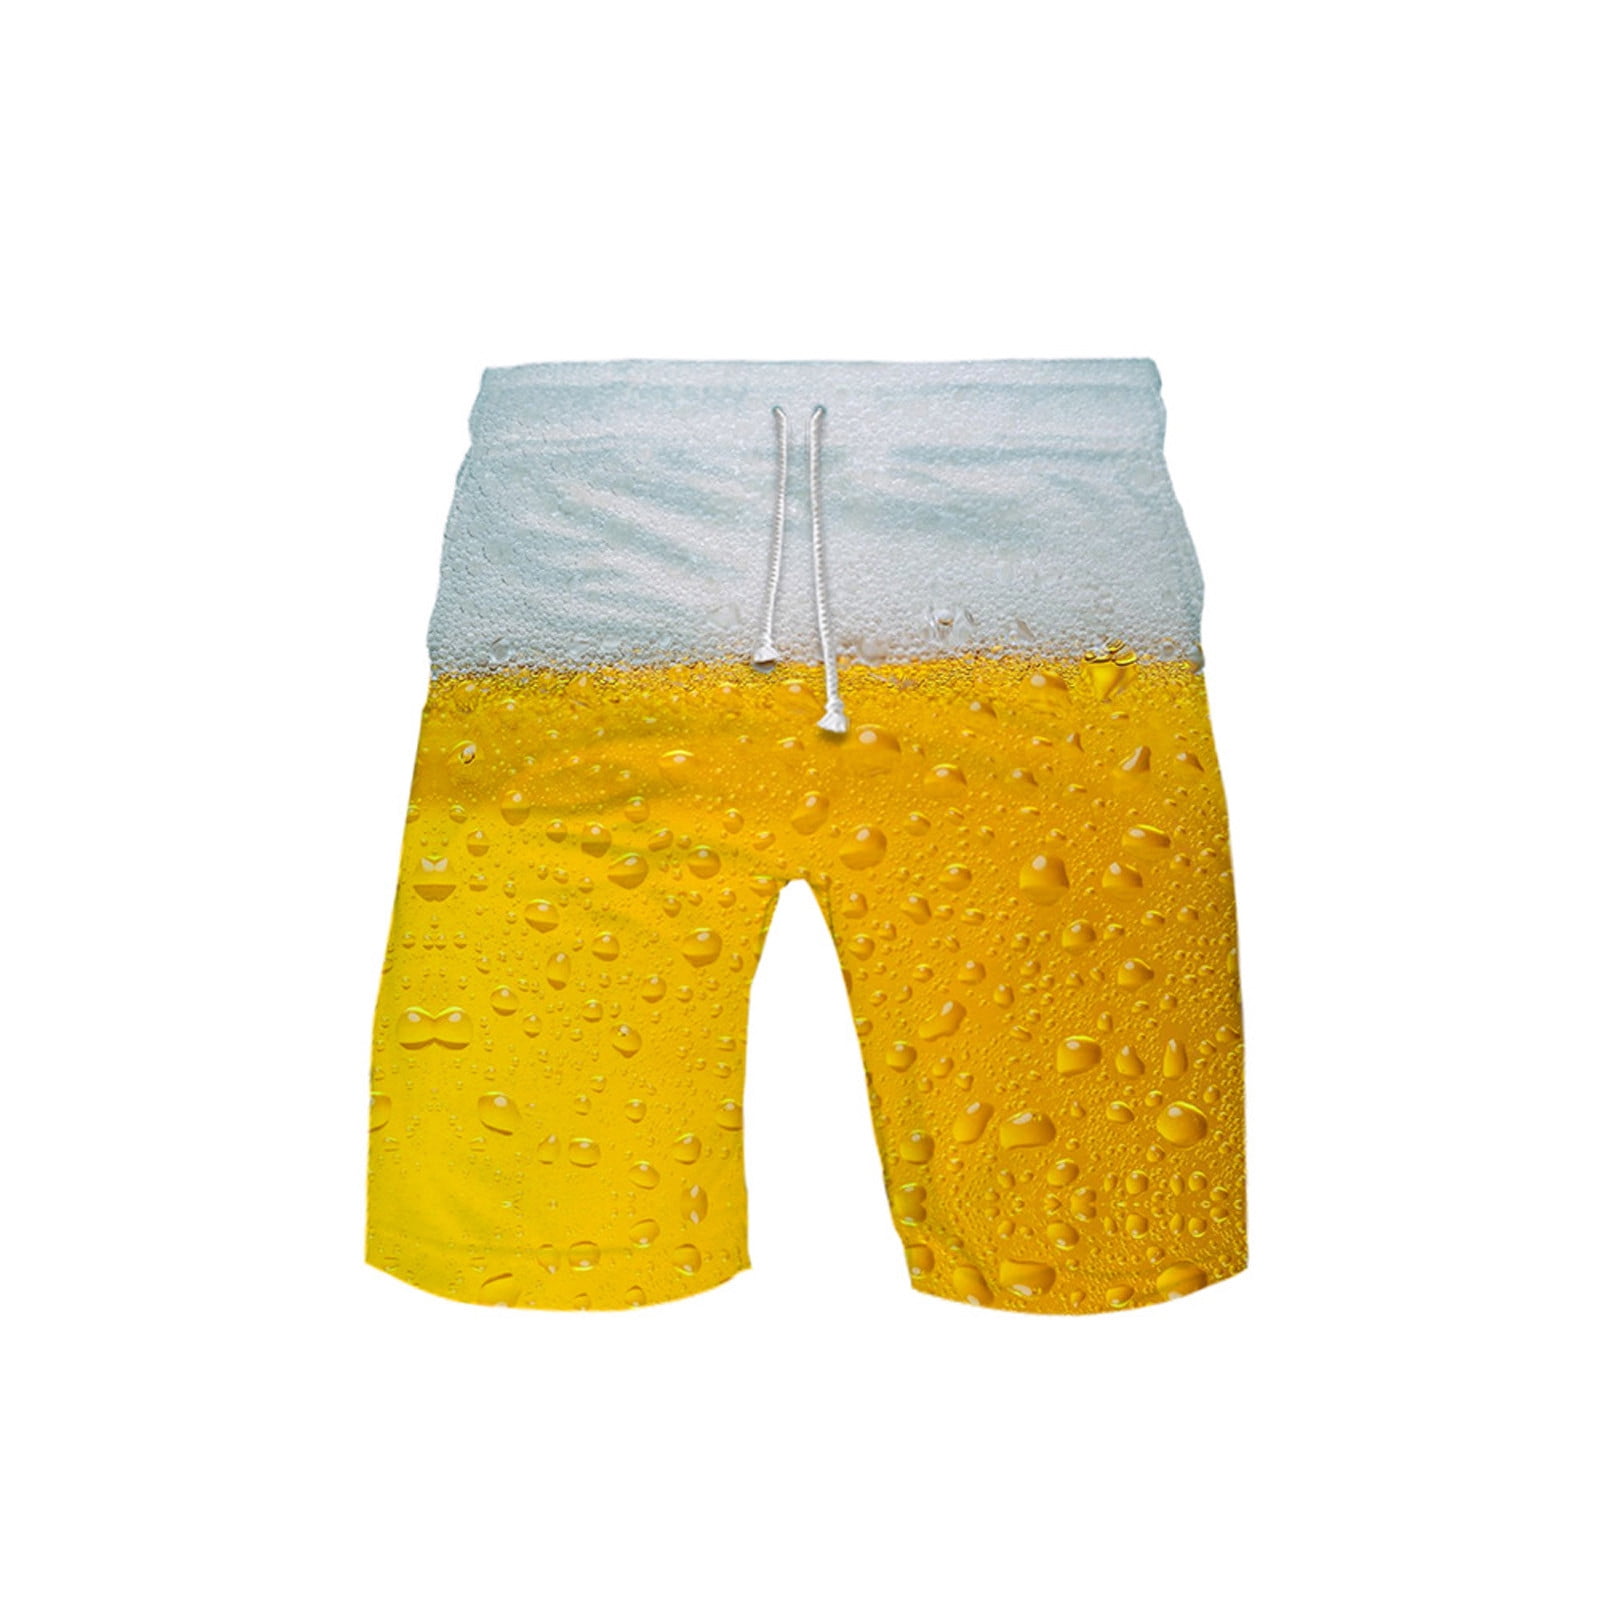 Penkiiy Men's Loose Beer Shorts Printing Quick Dry Swimsuit Sports Swim ...